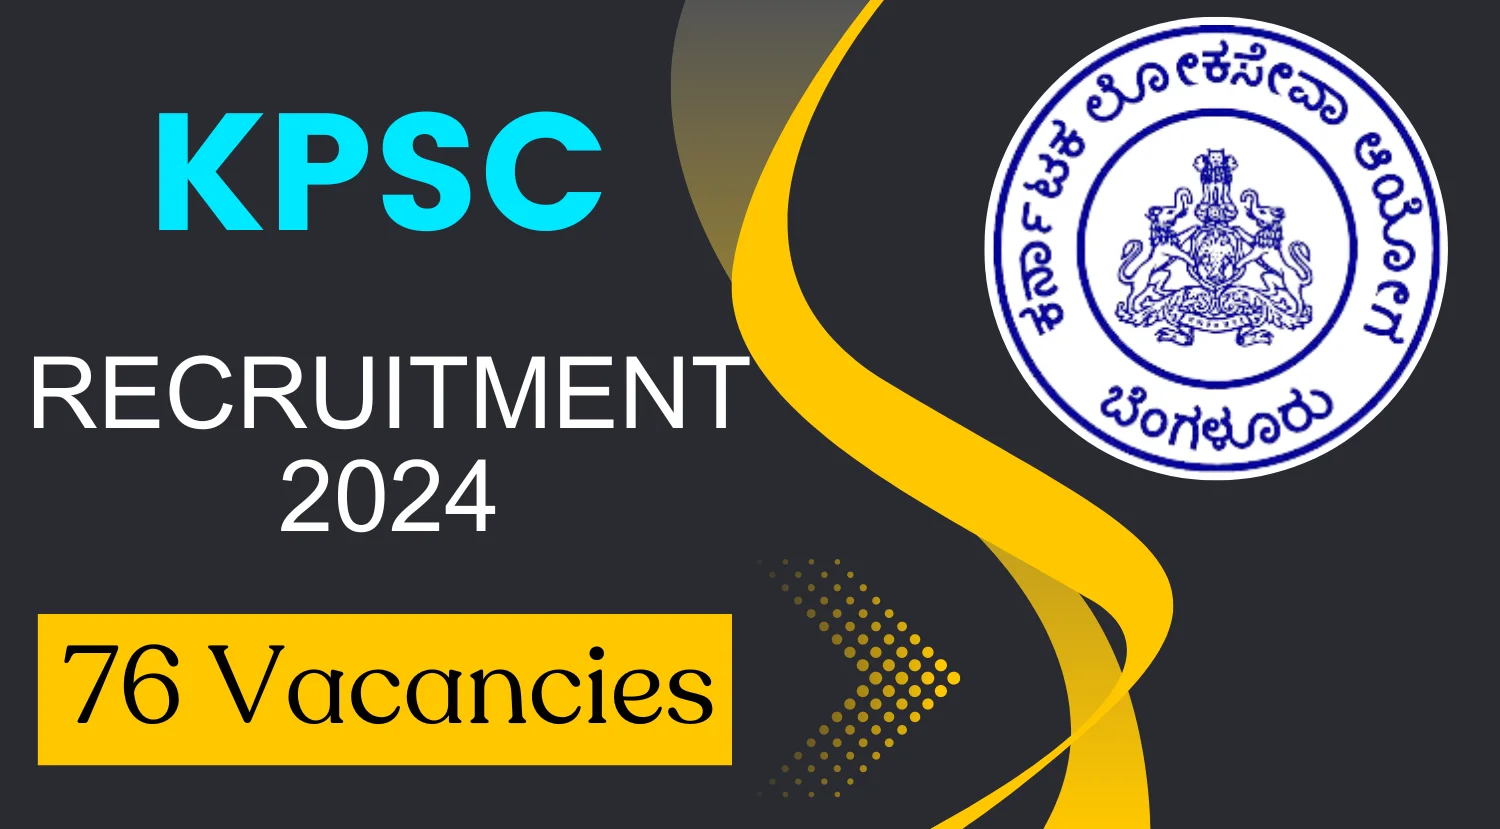 KPSC Motor Vehicle Inspector Recruitment 2024